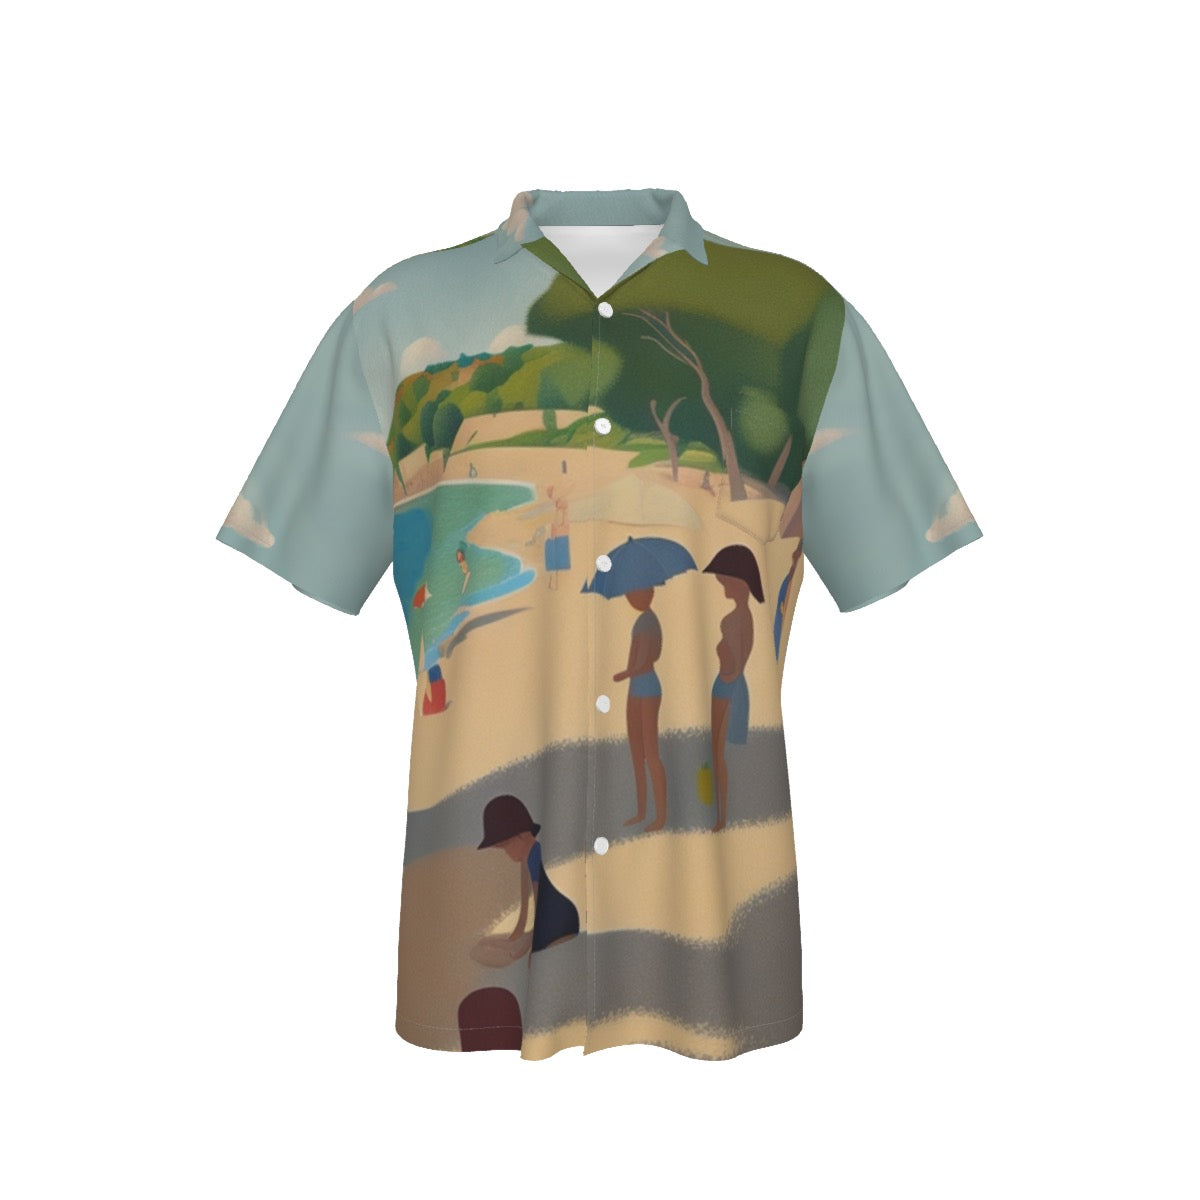 At the Beach -- Men's Hawaiian Shirt With Pocket